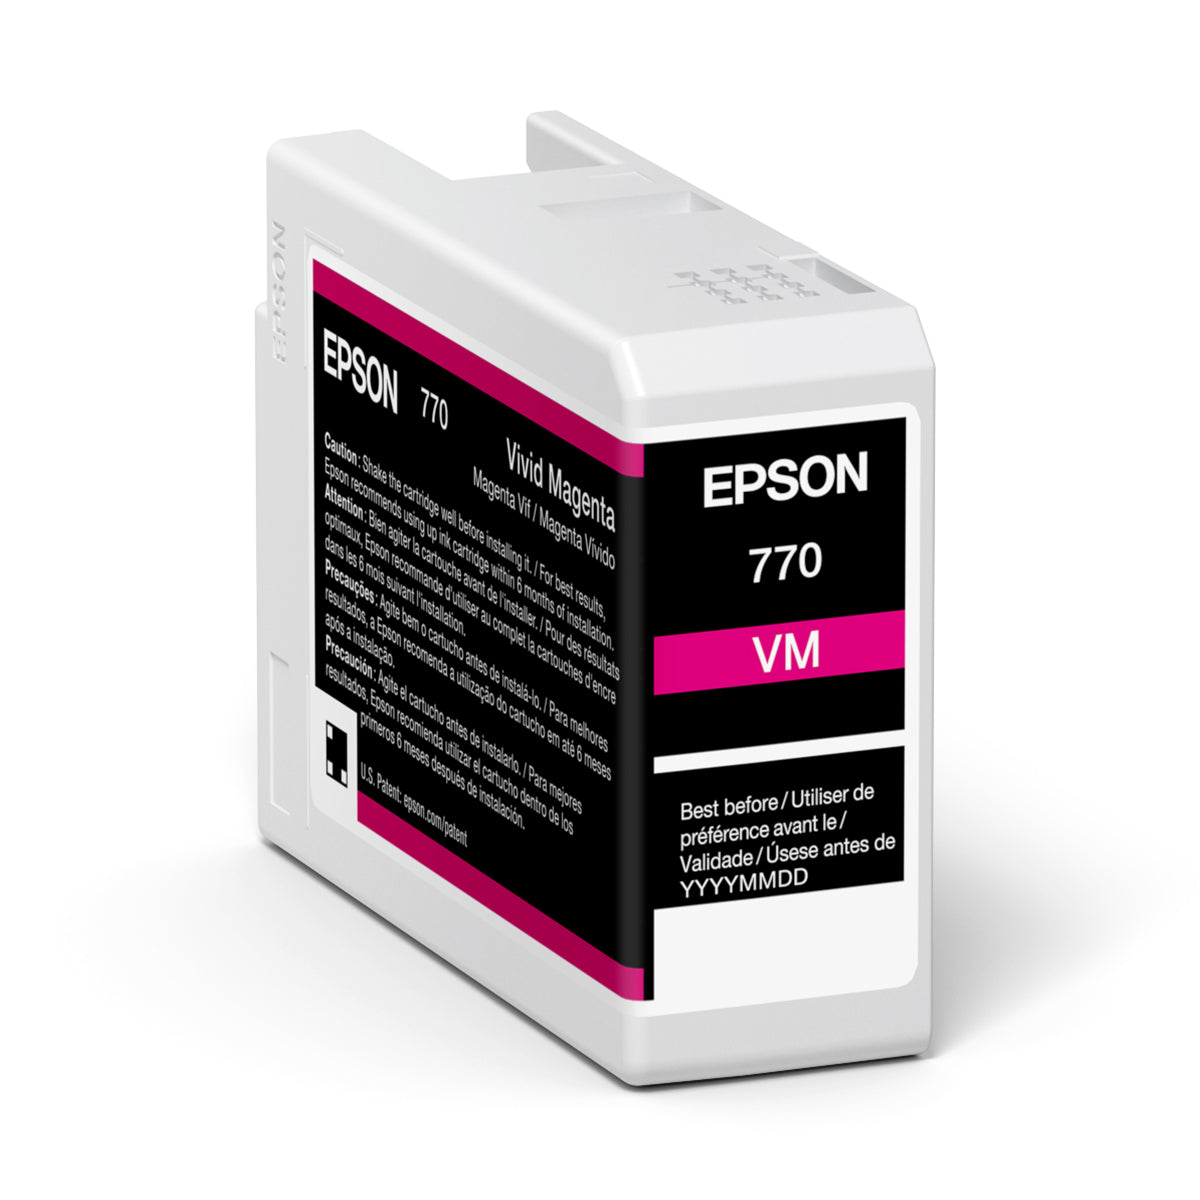 Epson T770320 P700 Ultrachrome HD Vivid Magenta Ink